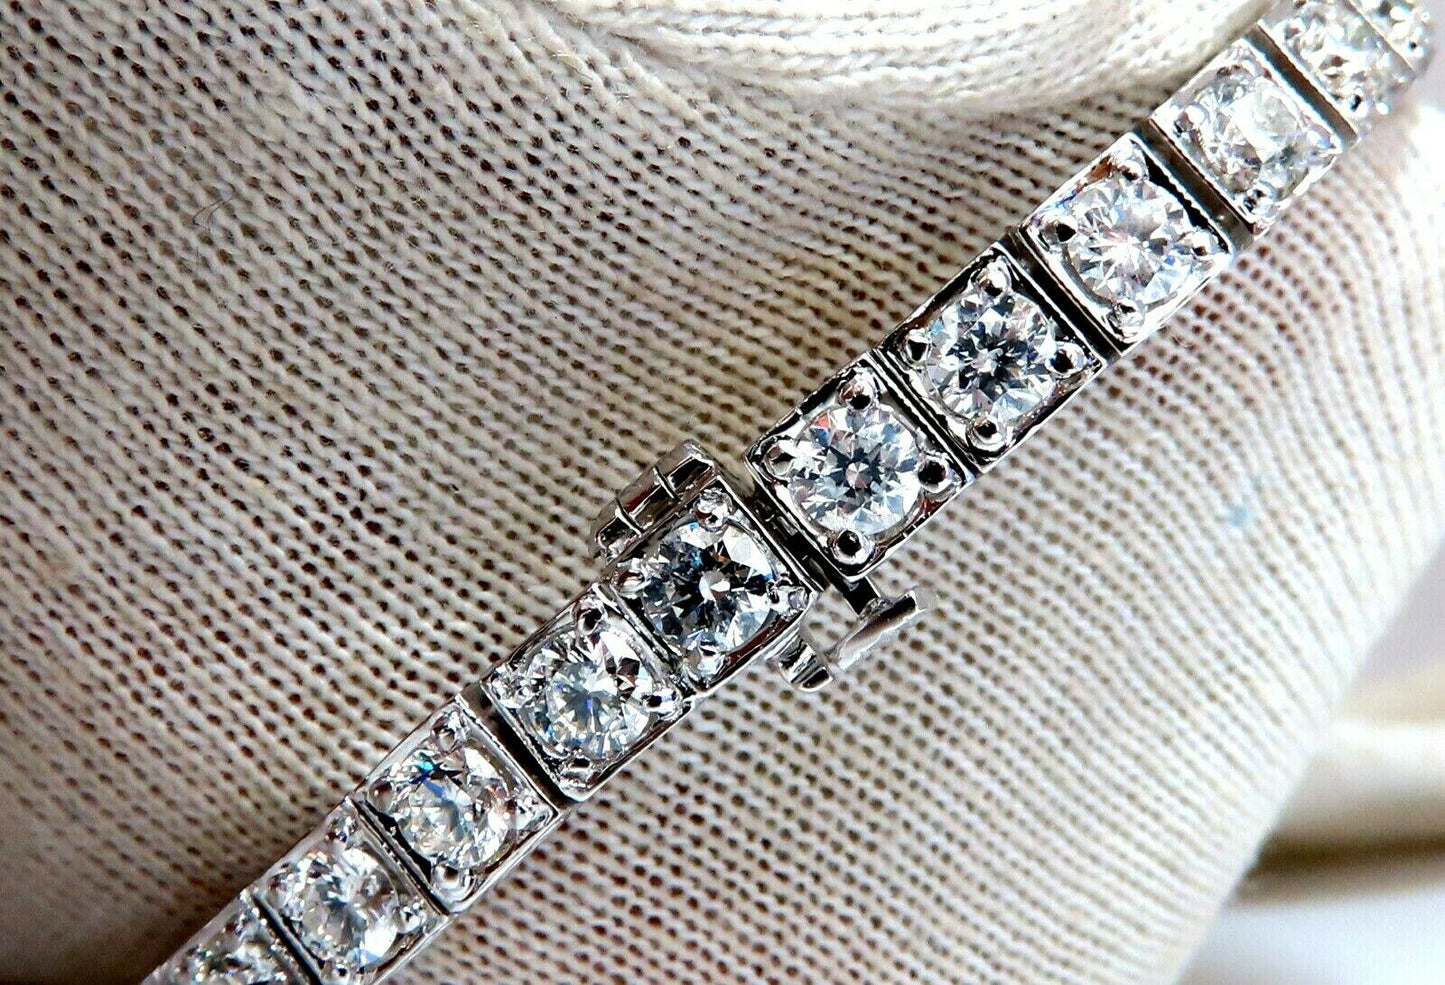 8.42ct Natural Diamonds Tennis Bracelet 14kt Gold Squared Box Bead Set